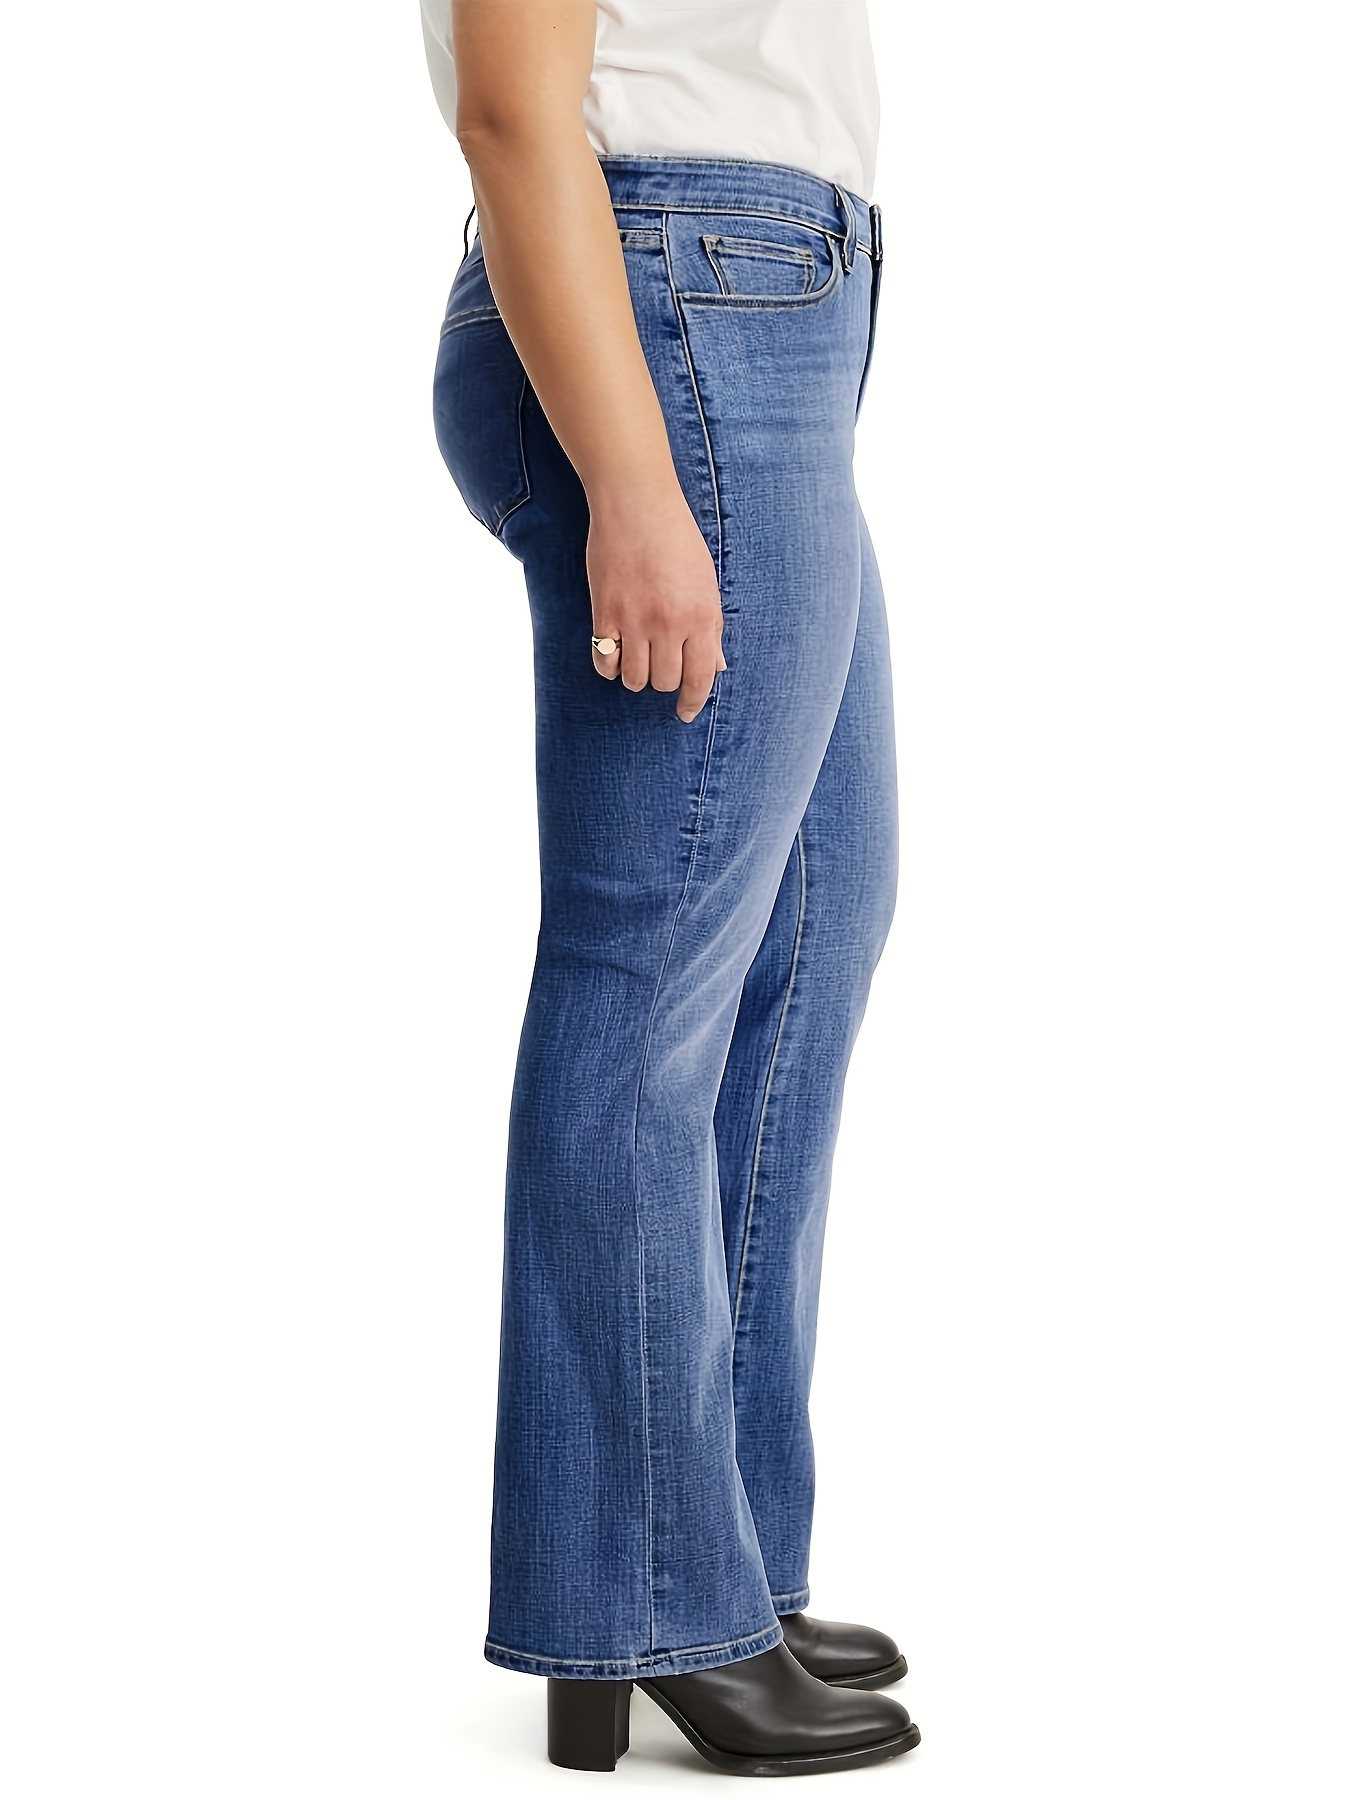 JDinms Women's Bell Bottom High Waist Fitted Denim Flare Jeans 